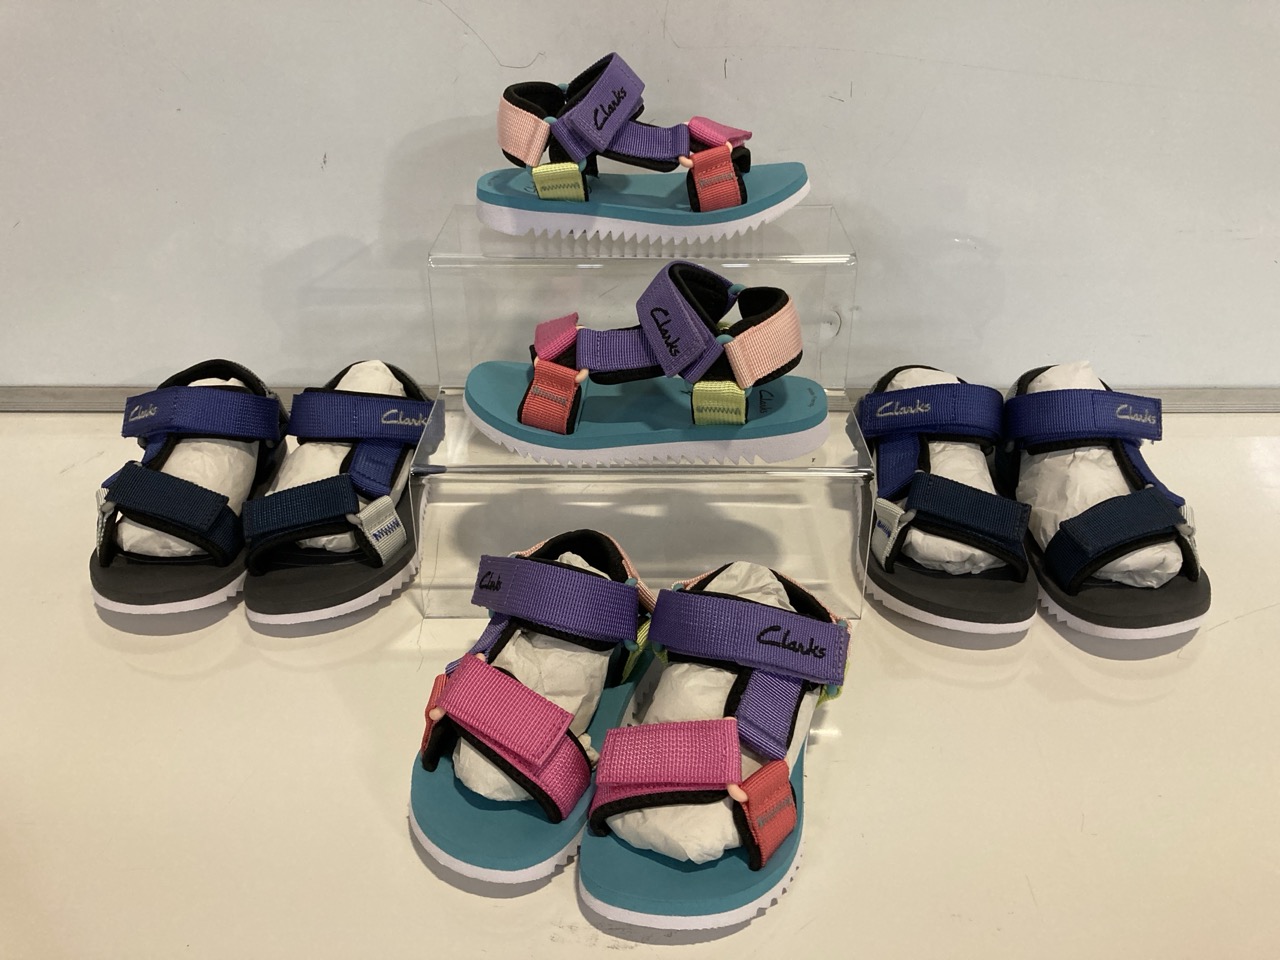 4 X PAIRS OF CLARKS CHILDREN'S FOOTWEAR, TO INCLUDE CLARKS PEAK WEB K BLUE COMBI SANDALS IN UK SIZE 11